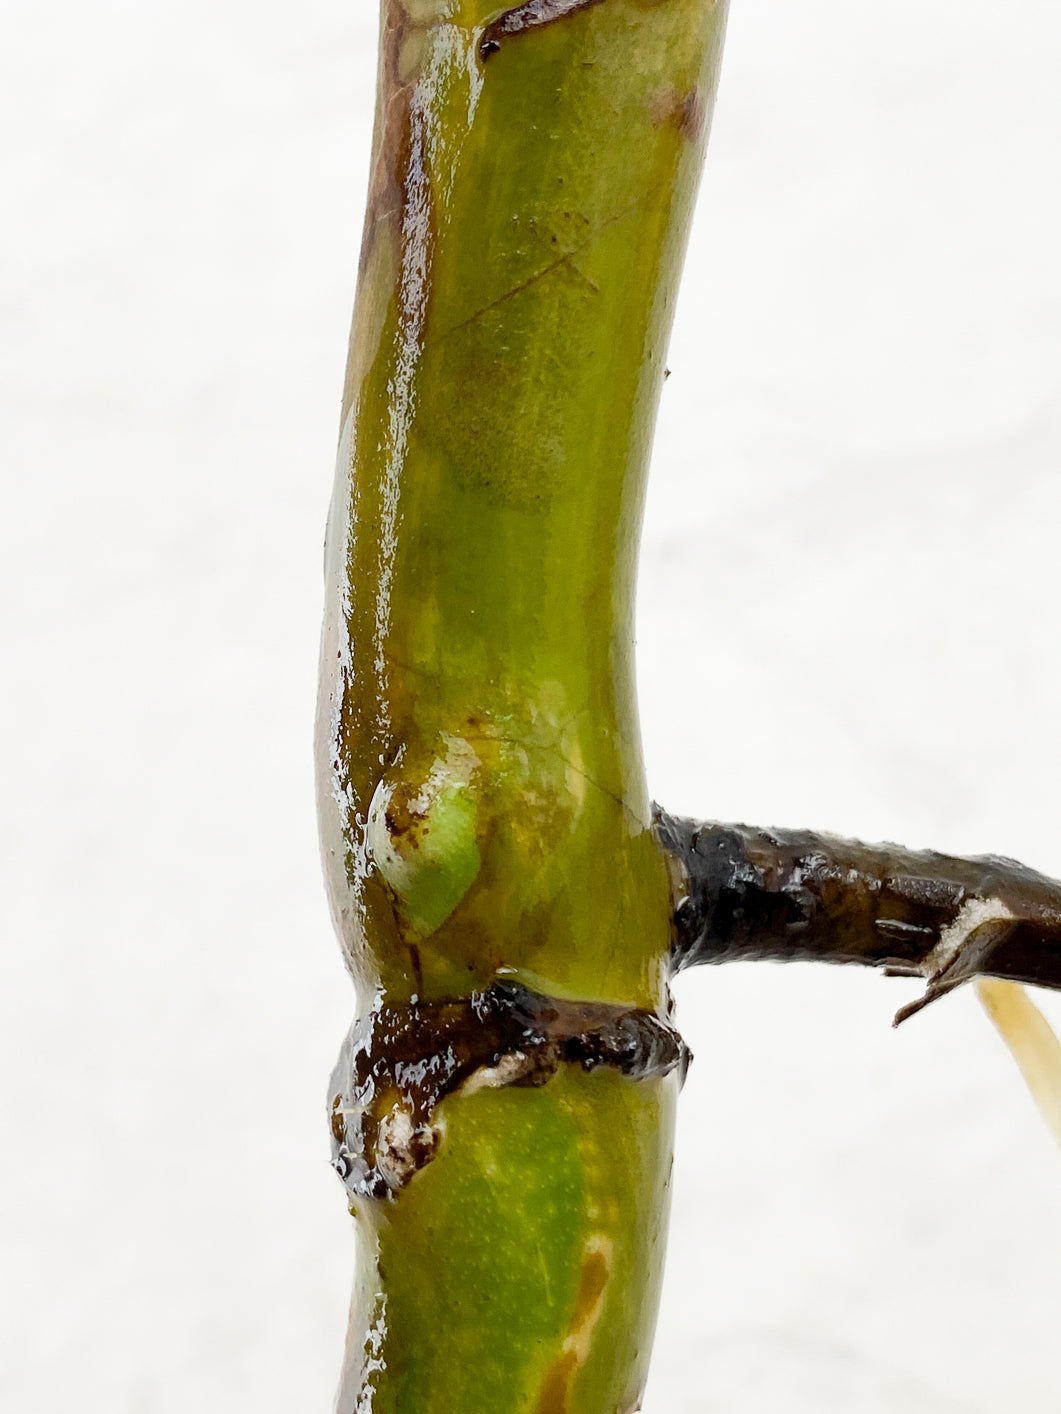 Monstera albo variegated Rooting 1 leaf double node 2 growing buds